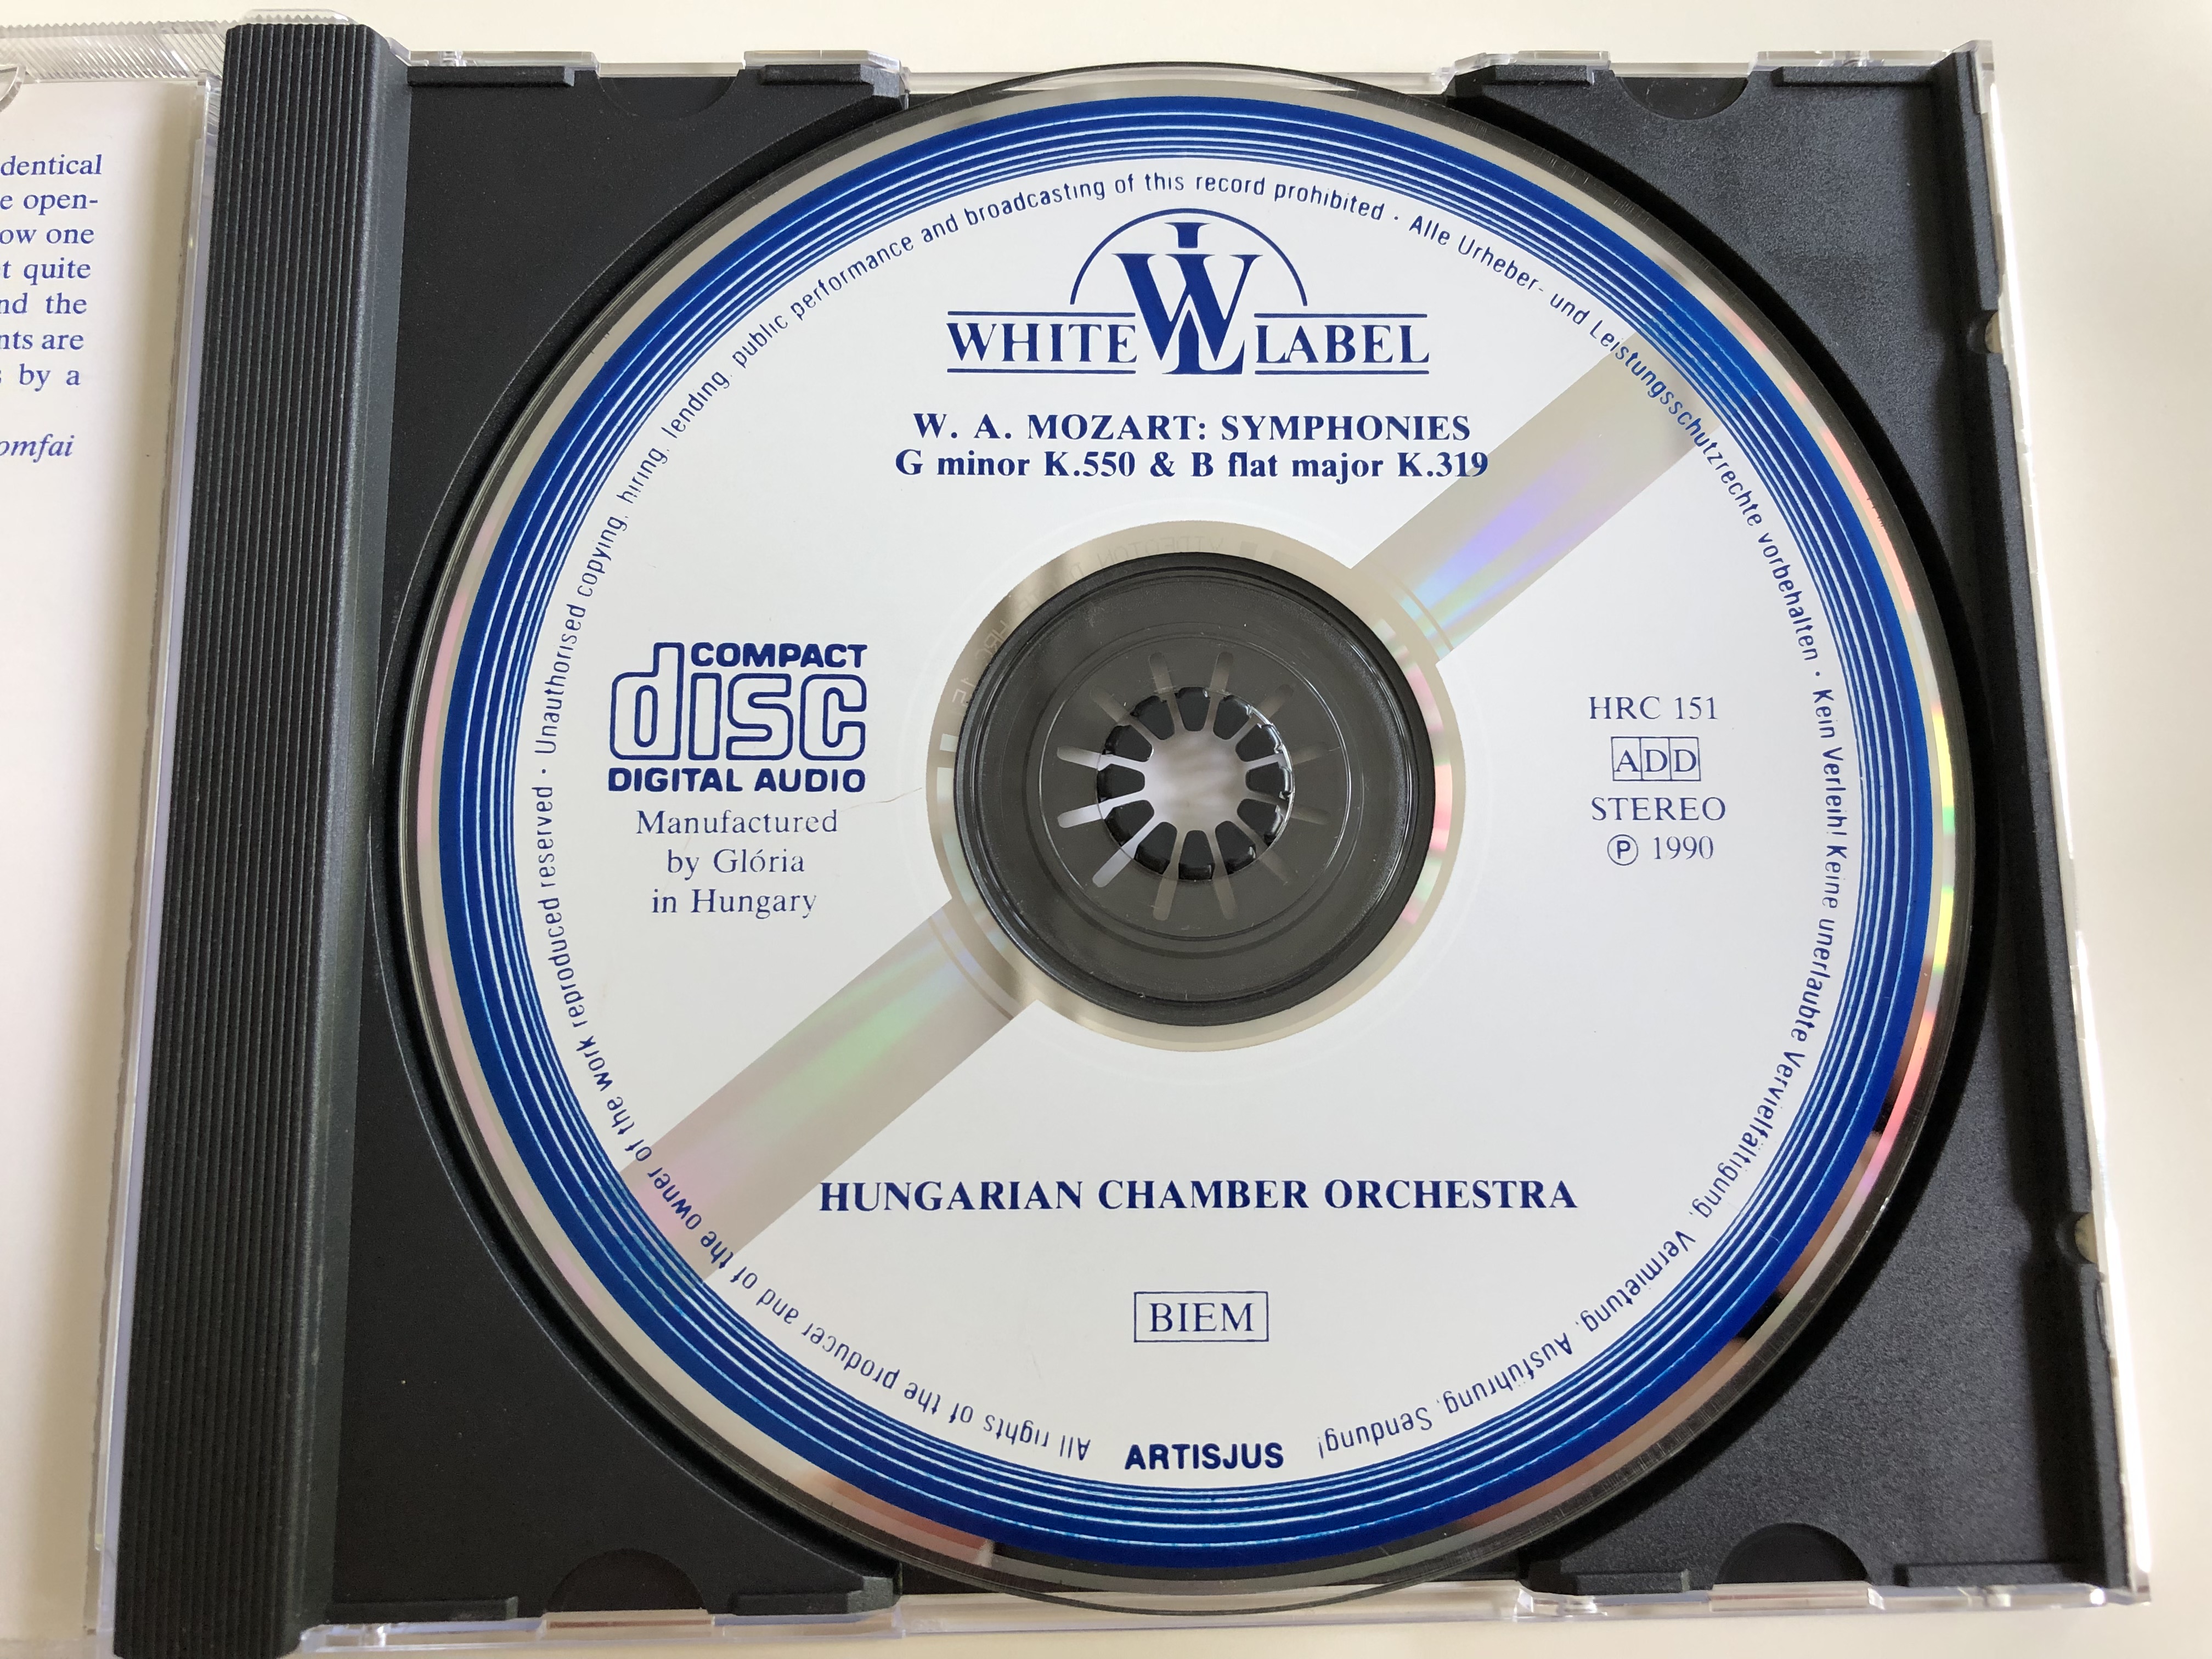 w.-a.-mozart-symphonies-g-minor-k.550-b-flat-major-k.319-hungarian-chamber-orchestra-conducted-by-vilmos-t-trai-hungaroton-white-label-hrc-151-audio-cd-1990-6-.jpg